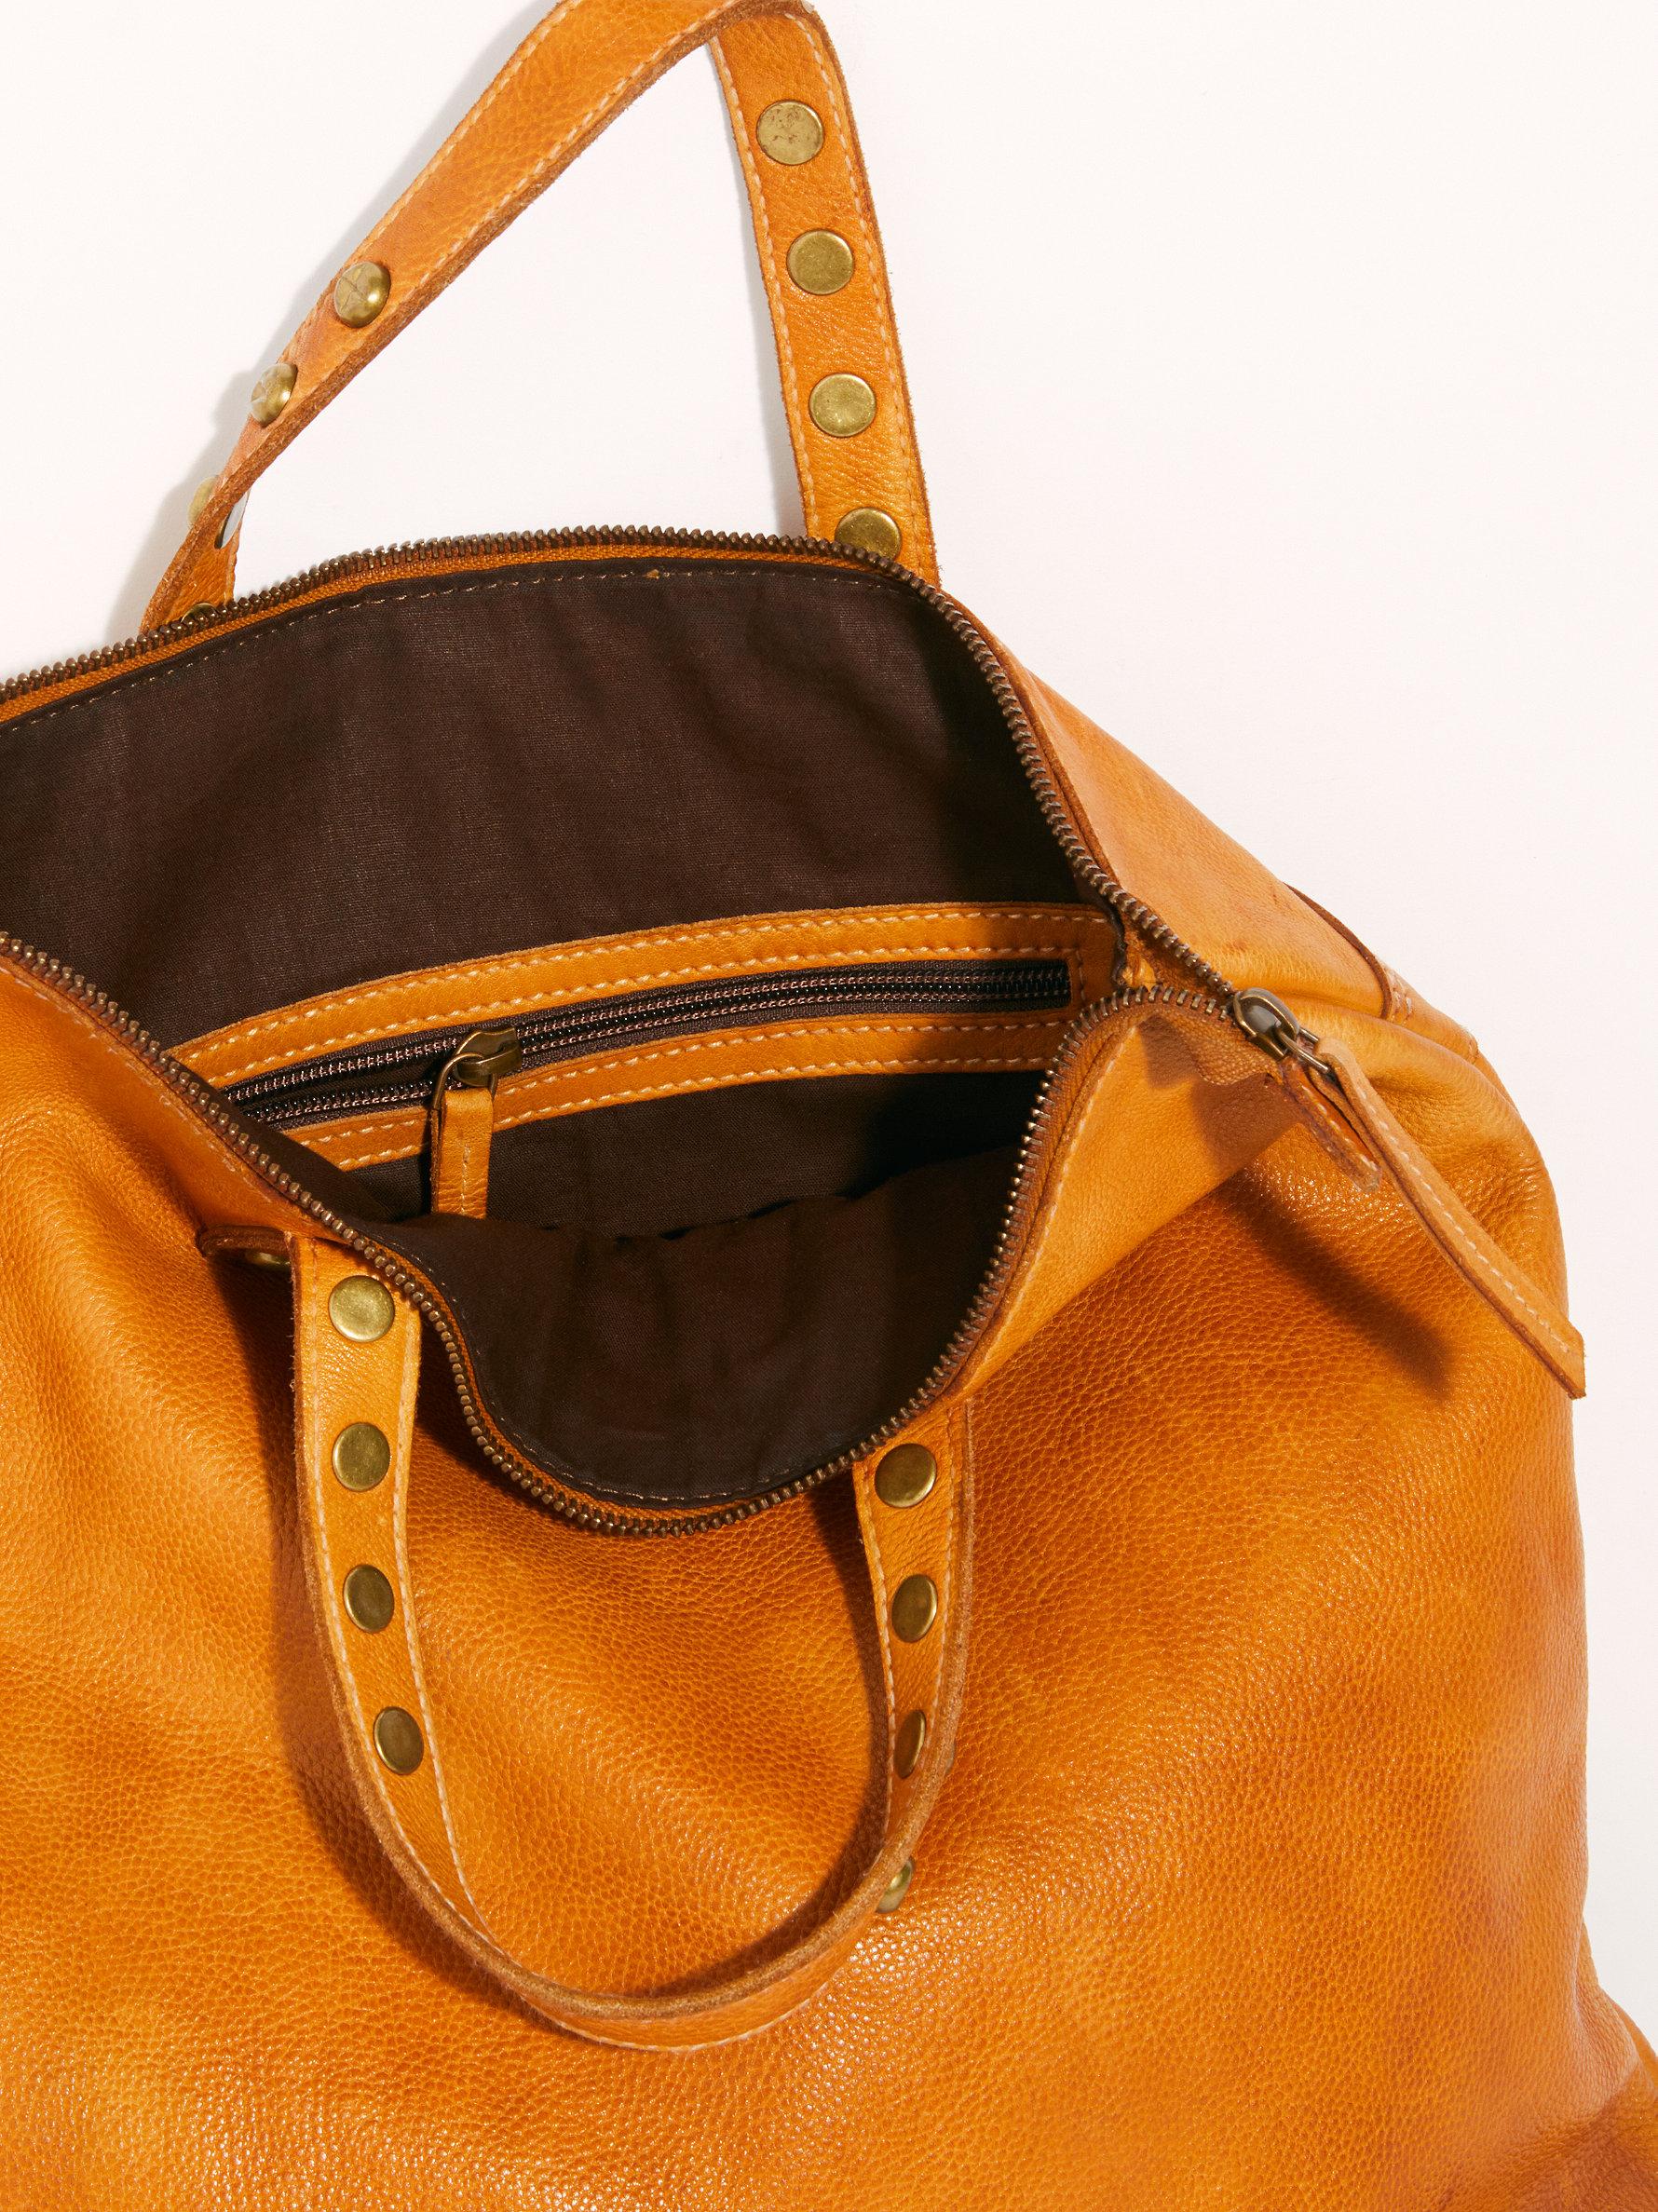 Juno Studded Backpack - Shop Trendy Bags Online – EDGABILITY